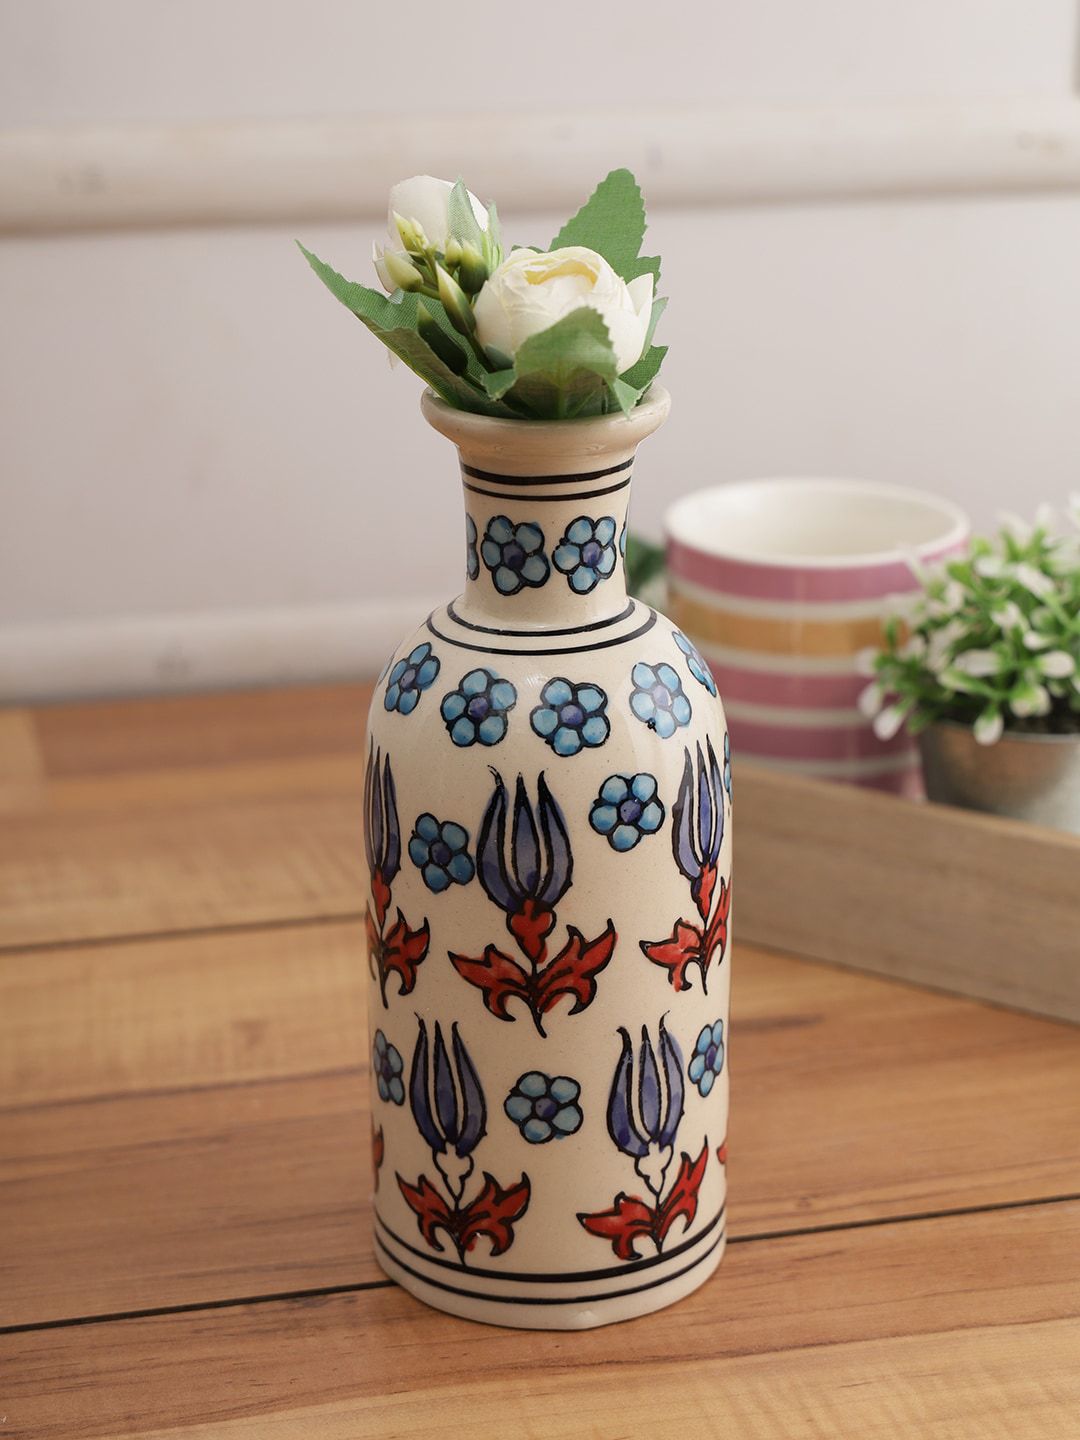 Aapno Rajasthan Off-White & Blue Printed Ceramic Vase Price in India